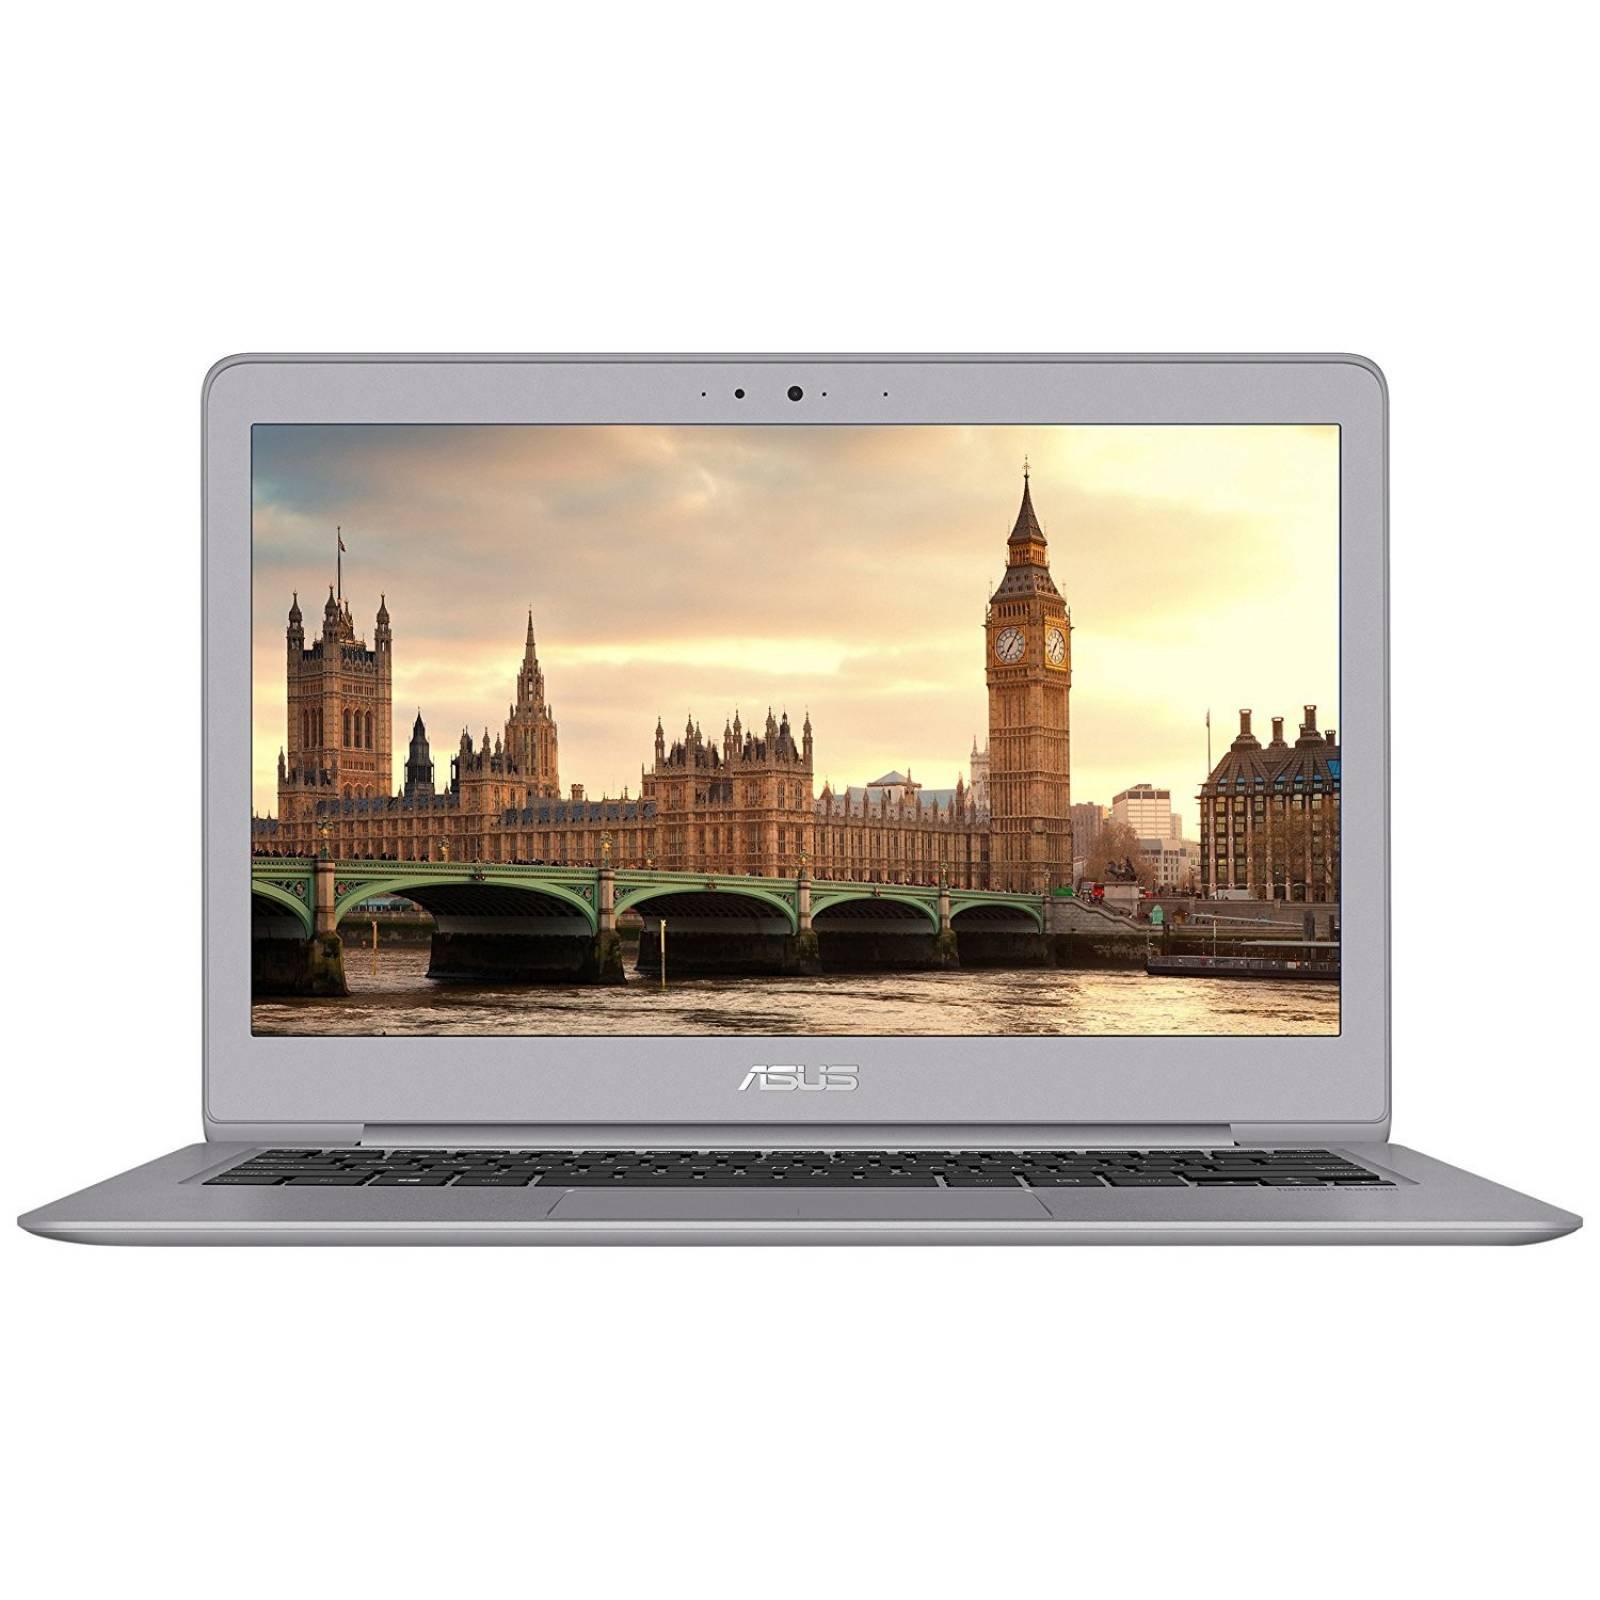 Laptop Asus ZenBook 13 UX330UA i5 8GB 256GB SSD Win10